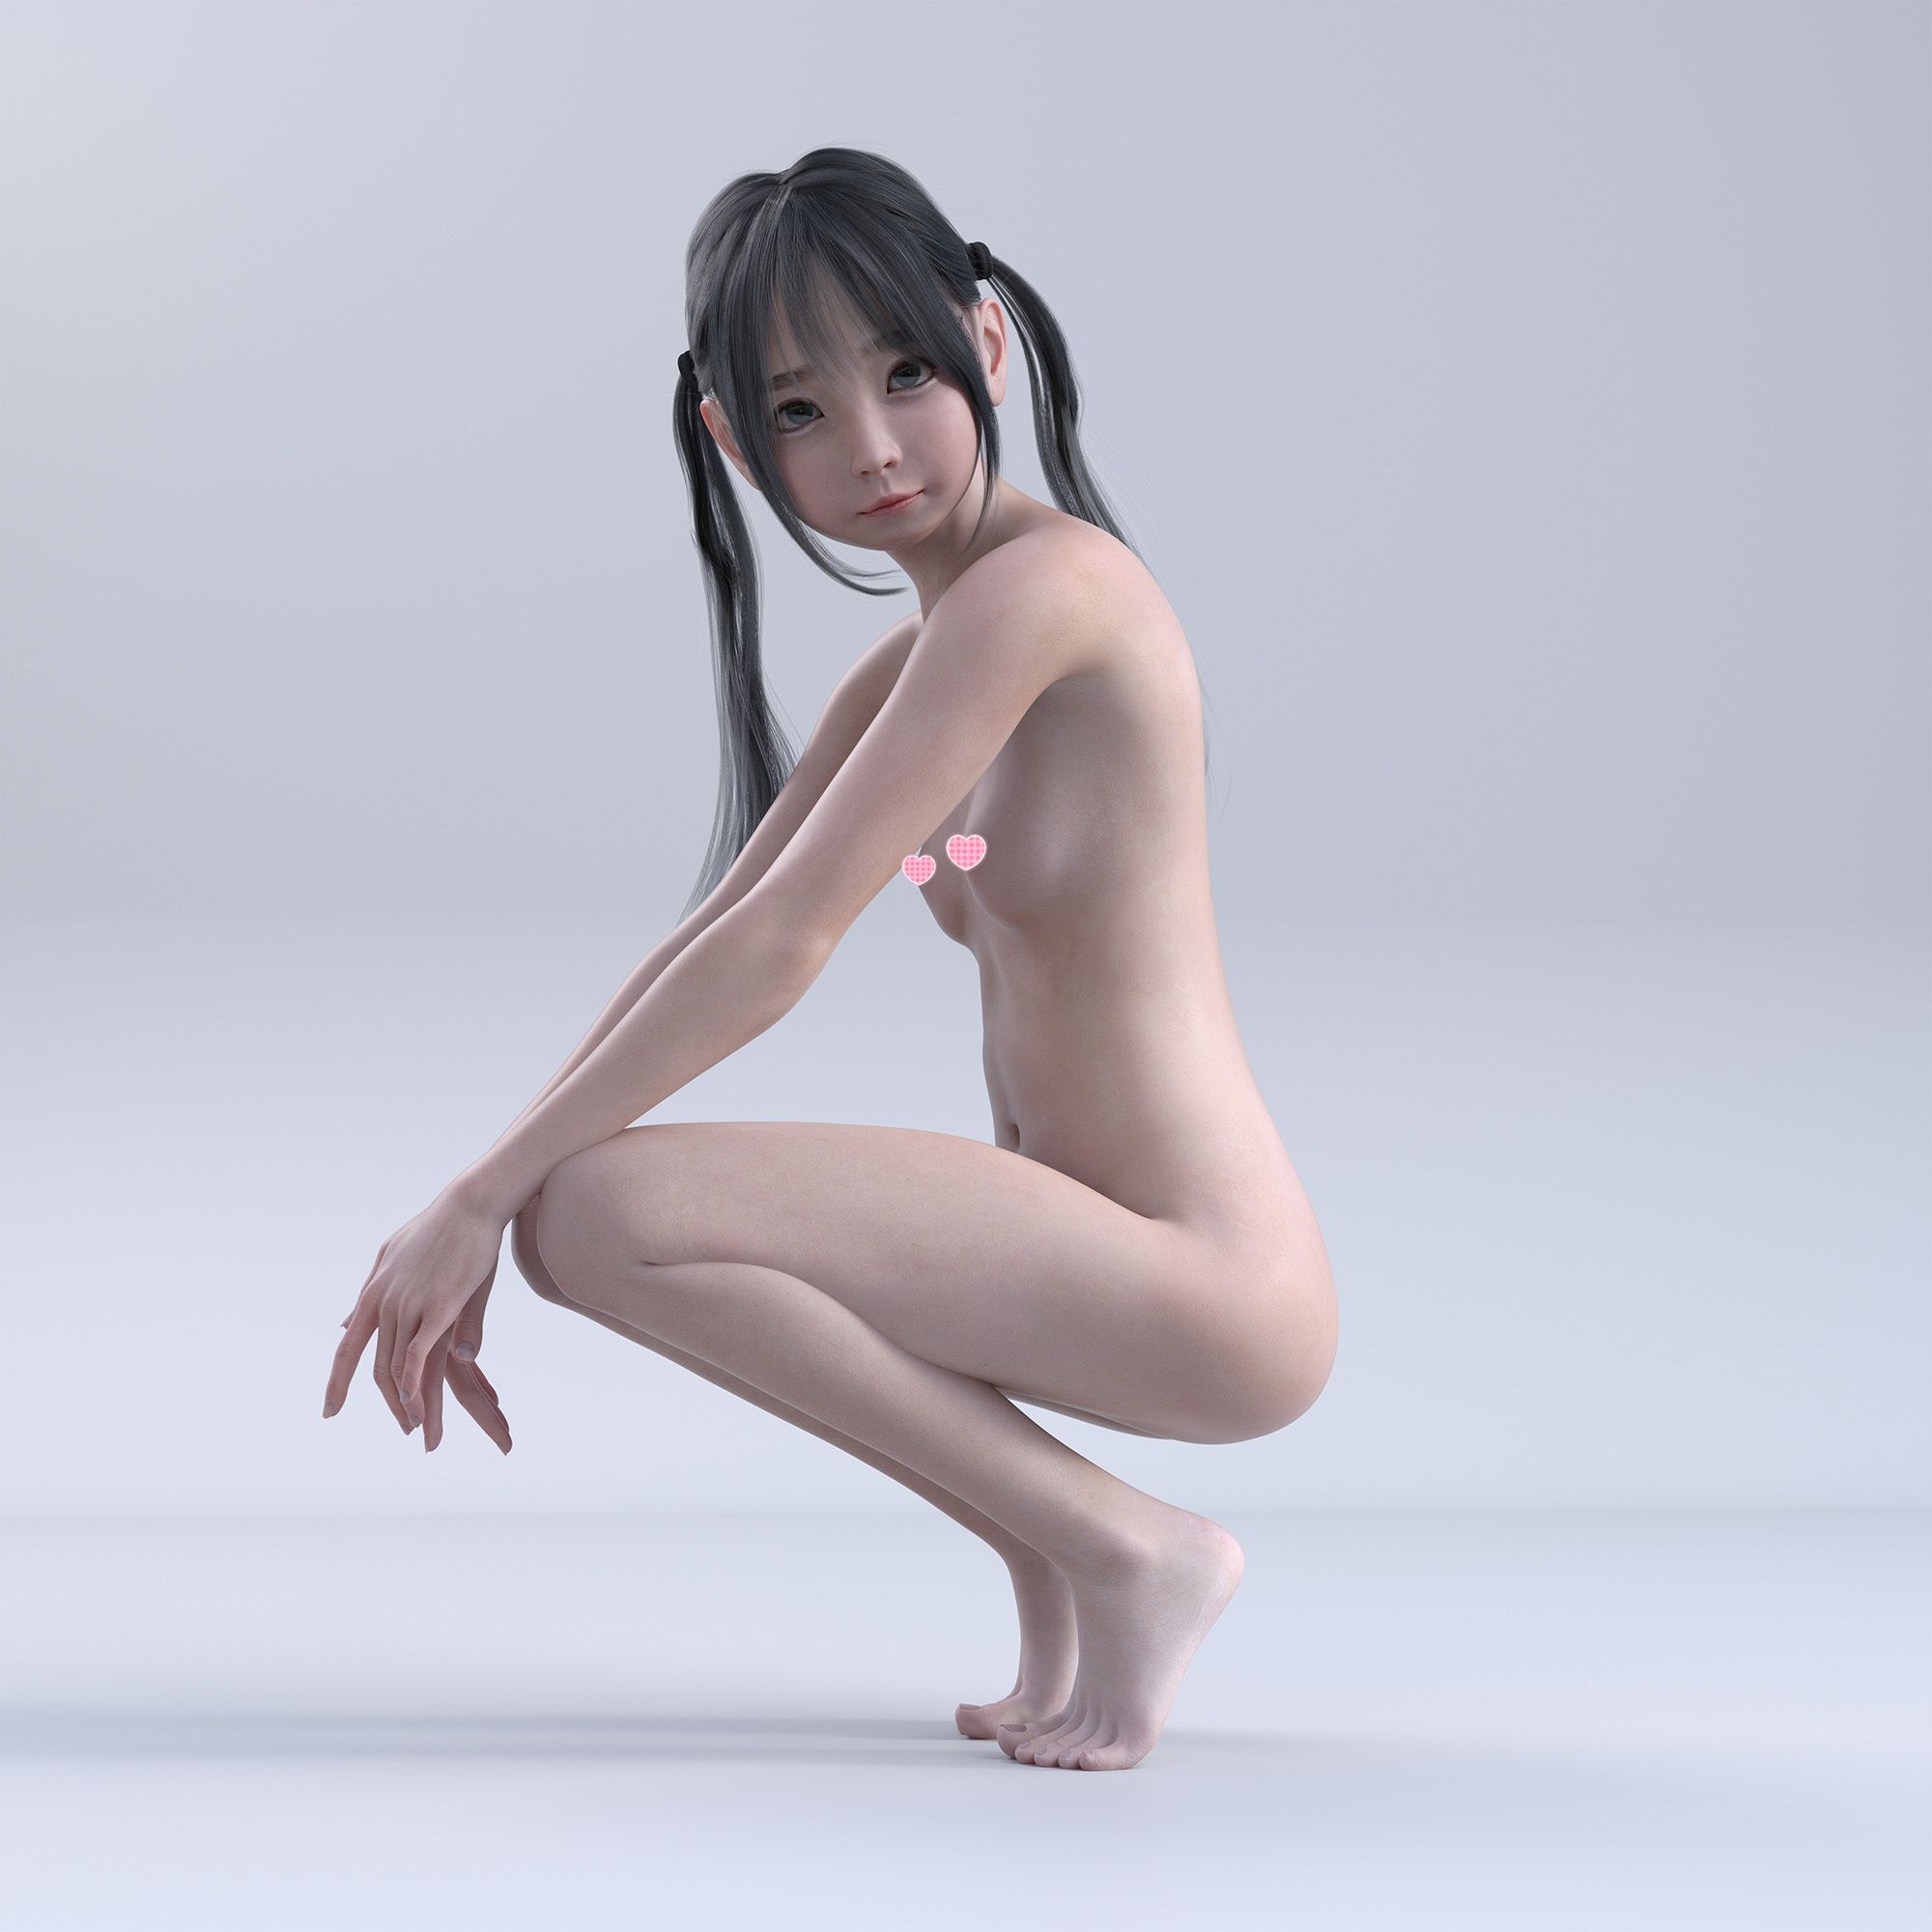 SWEET MEMORY - nude photo book - Model MIYU Vol.3【スイートメモリー ヌードフォトブック】6